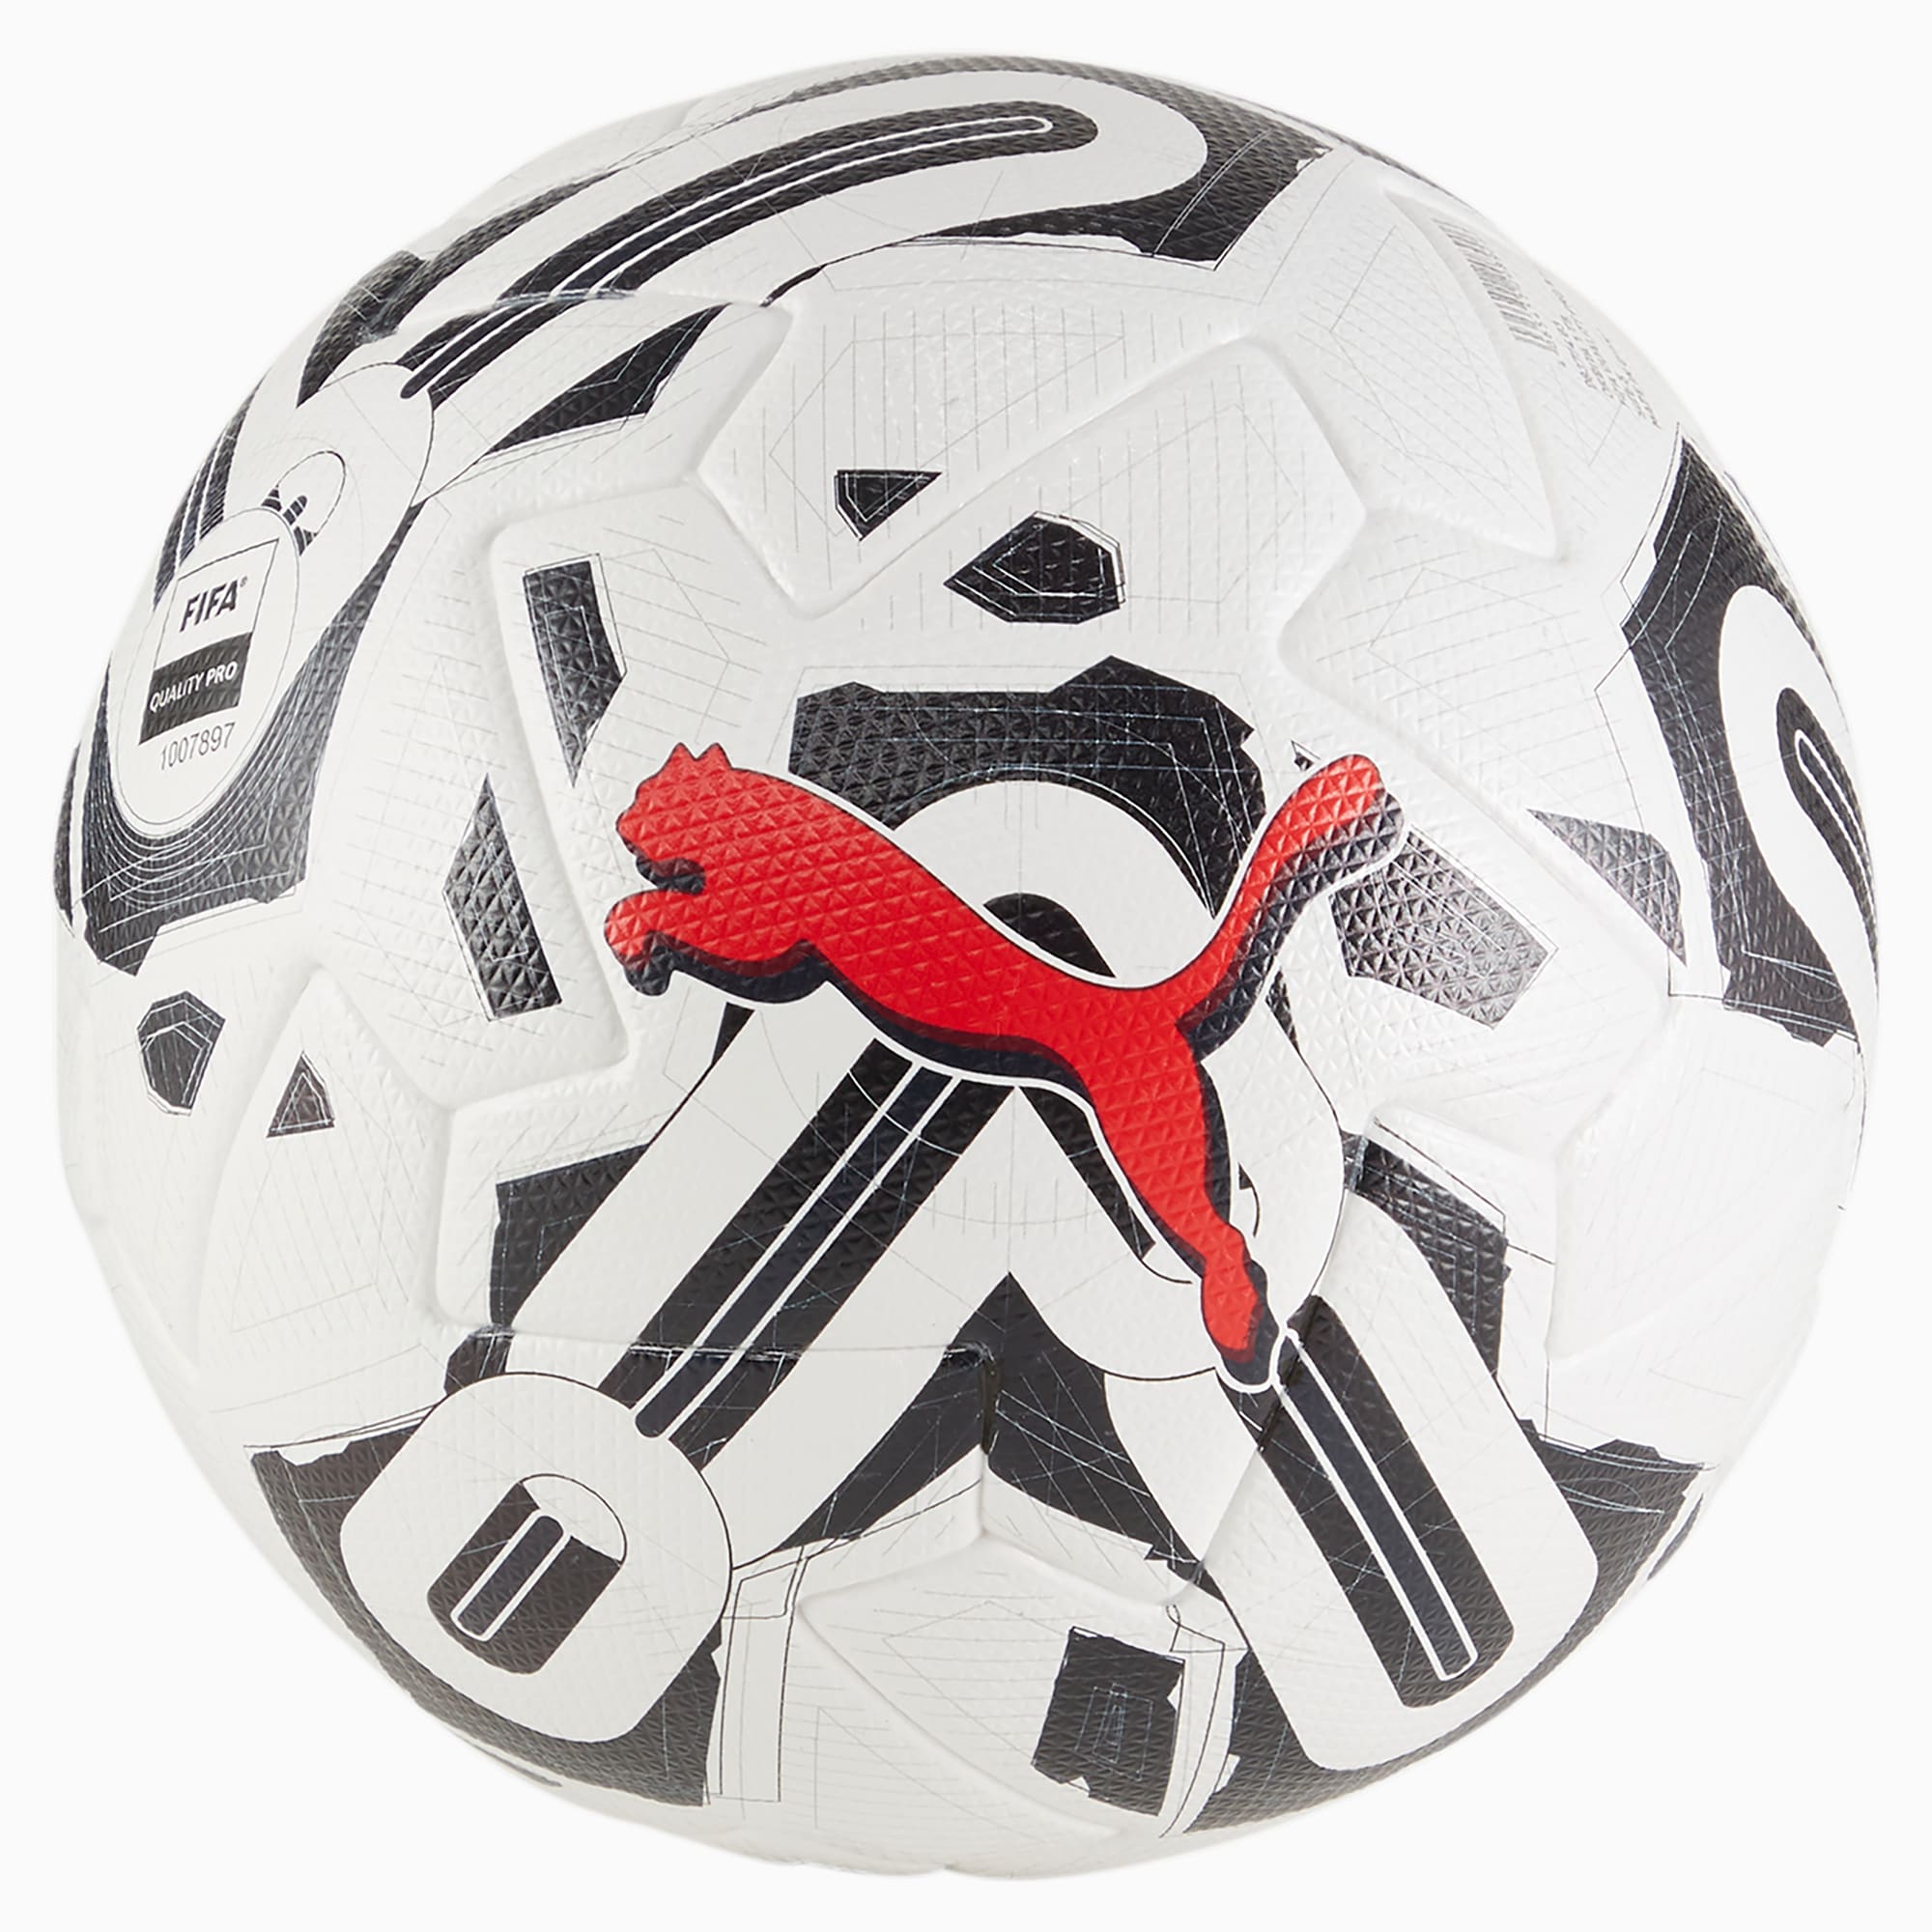 Women's PUMA Orbita 1 Tb Fqp Football, White/Black/Red, Size 5, Accessories